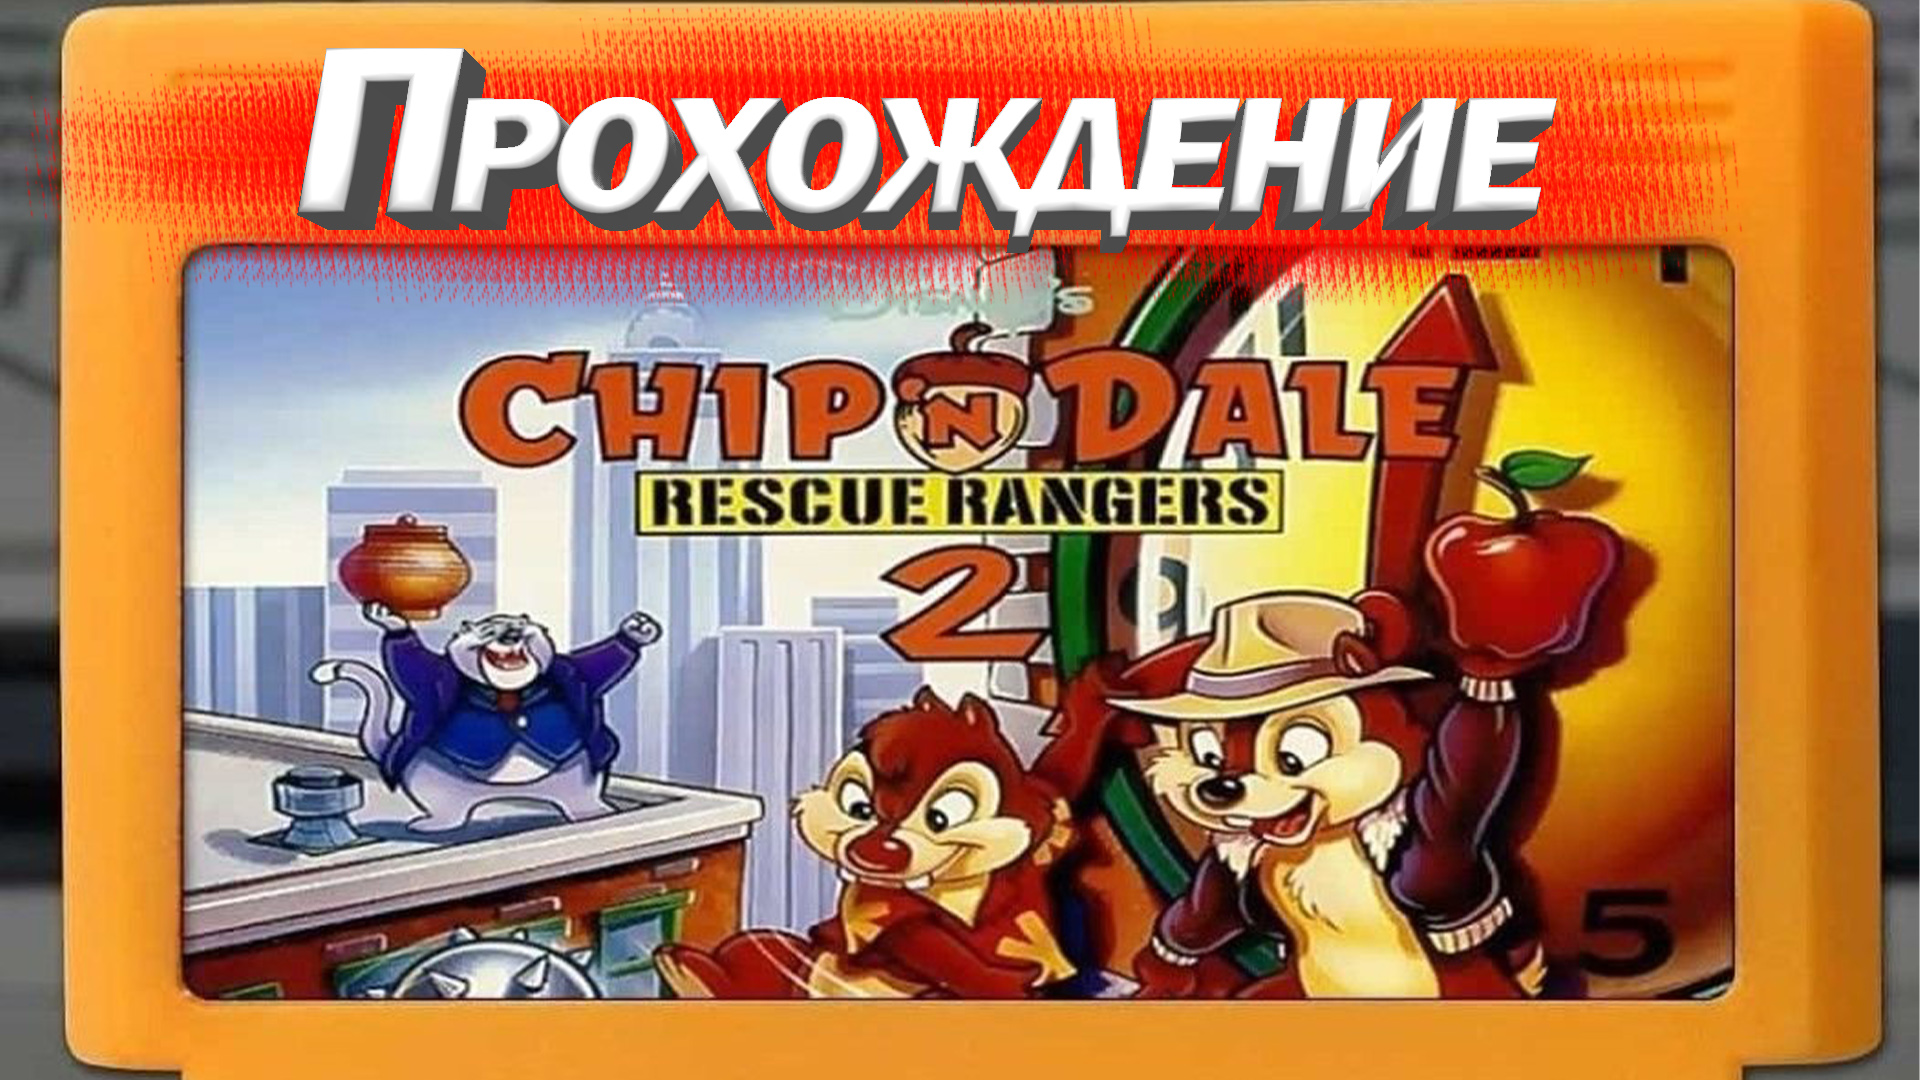 Chip and dale 2. Чип и Дейл игра. Чип и Дейл 2 часть Денди. Настольная игра чип и Дейл 90-х. Чип и Дейл игра на Xbox.